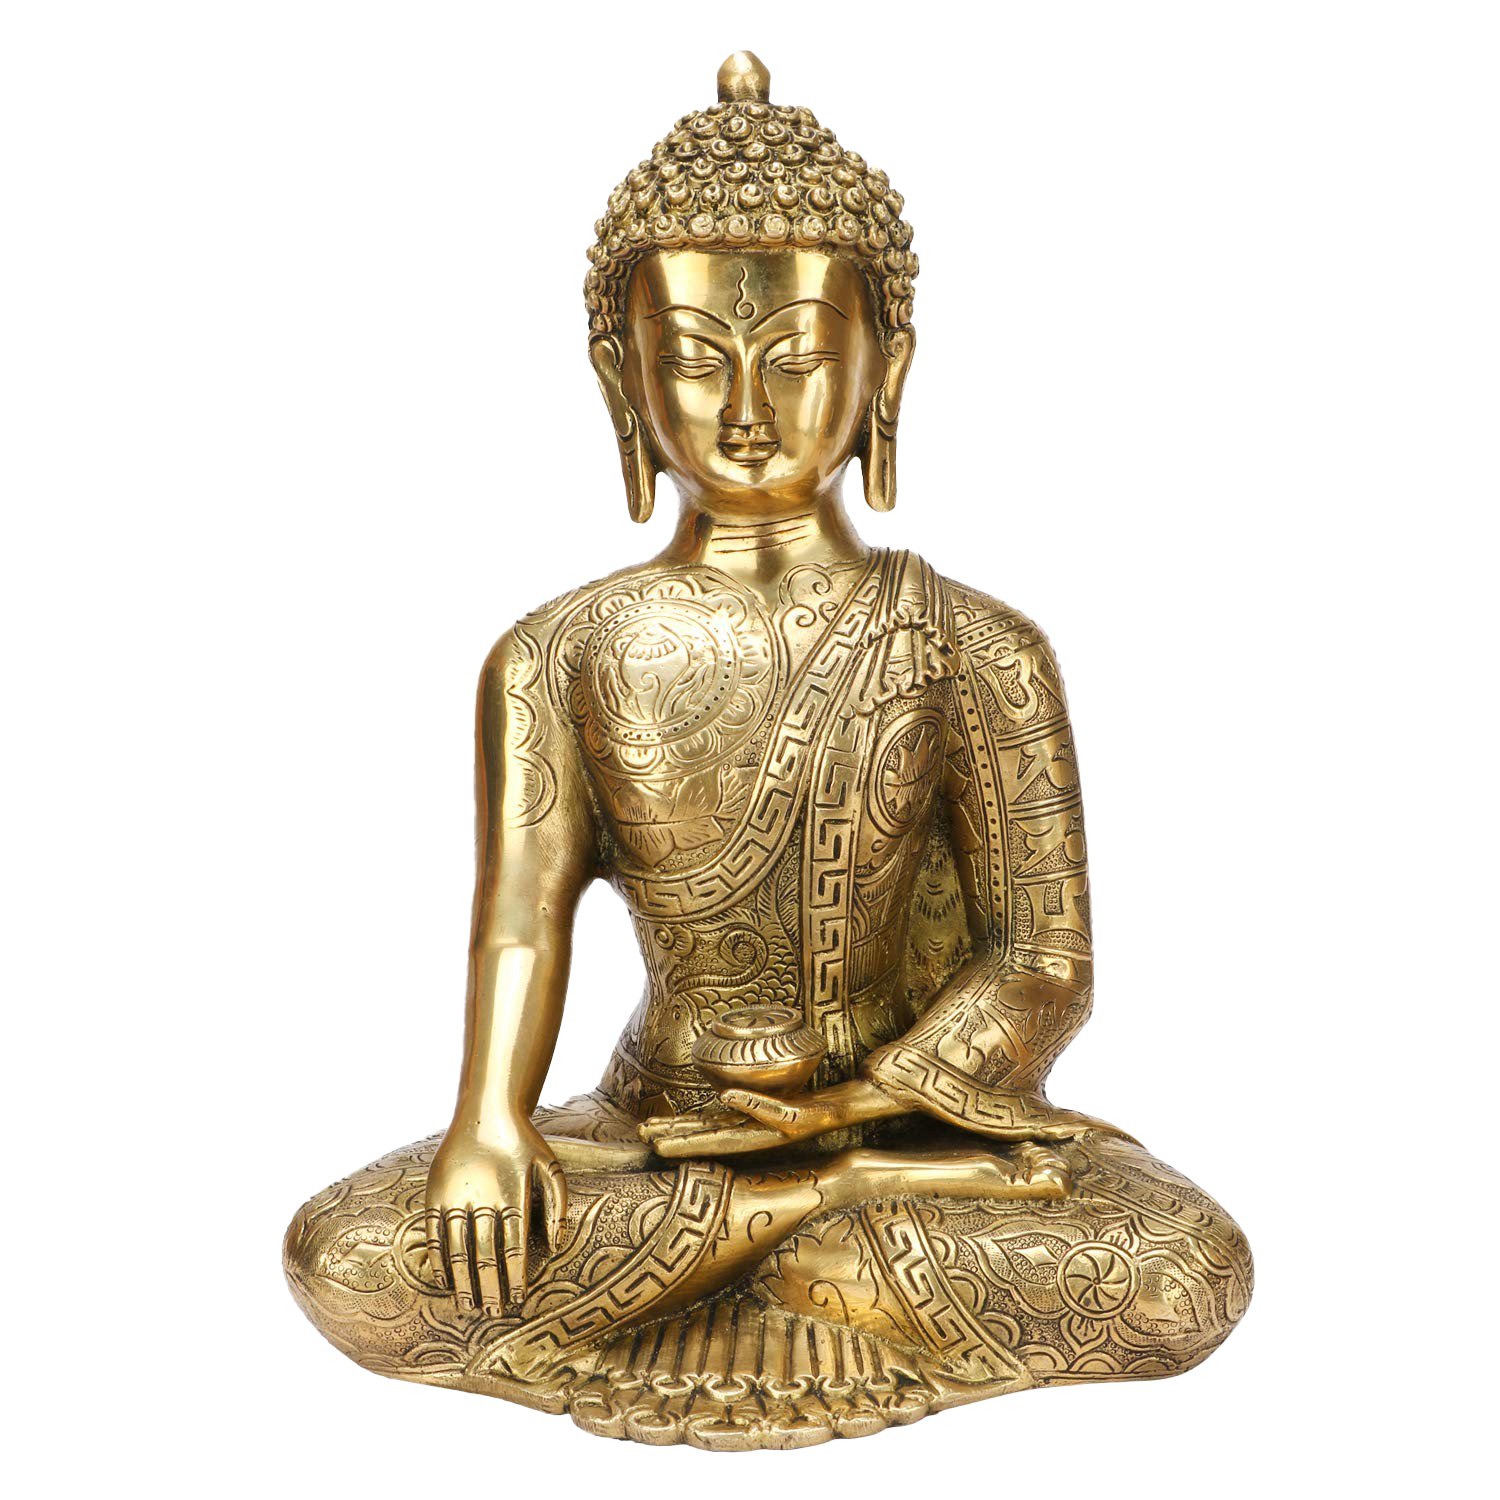 Buddha Statue PNG Image Transparent Background